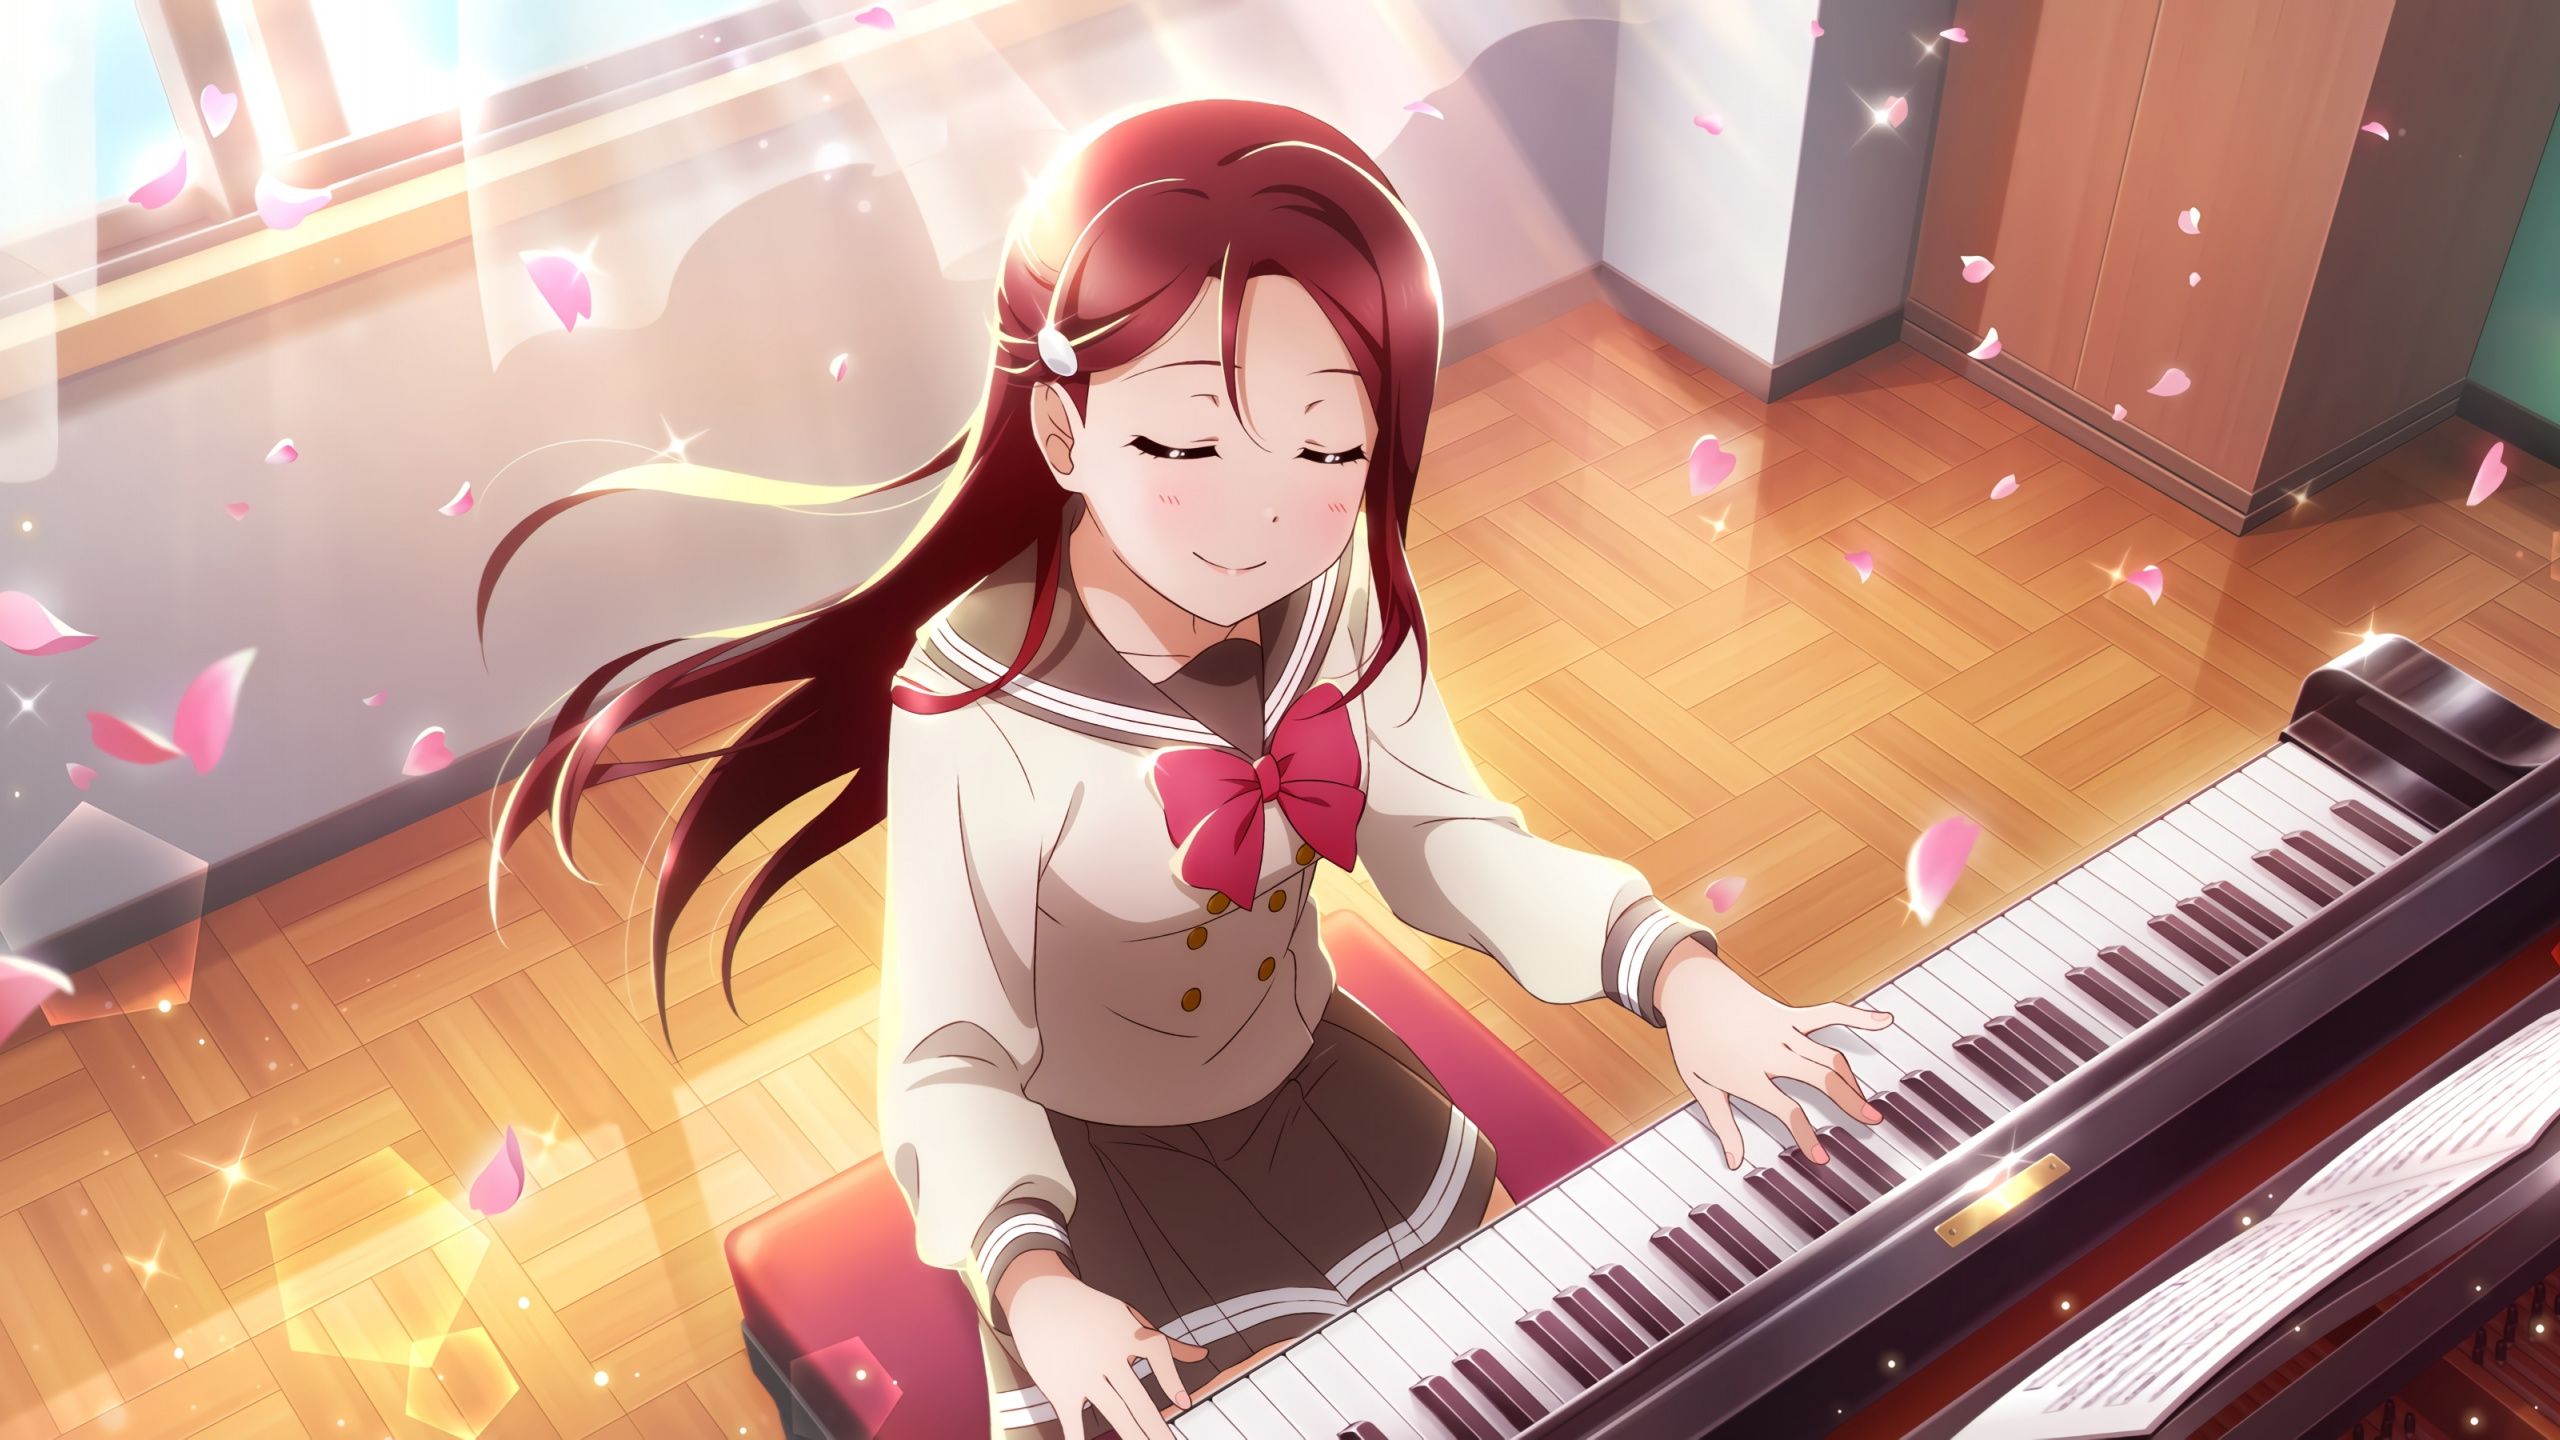 2560x1440 Download Piano play, Love Live!, anime girl, redhead wallpaper, 2560x1440, Dual Wide, Widescreen 16:9, Widescreen on WallpaperBat